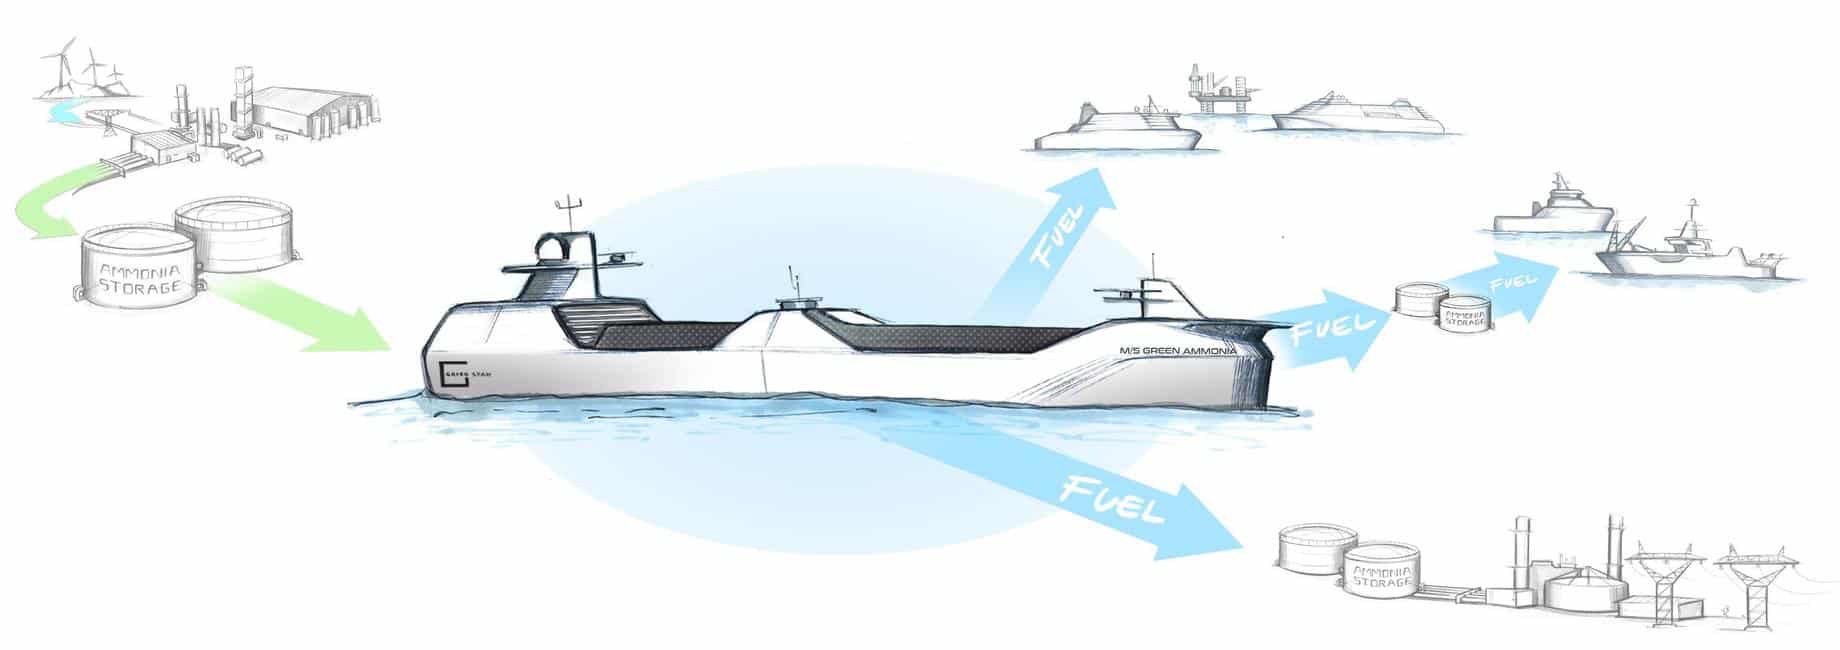 LMG Marin to design MS Green Ammonia zero-emission ammonia-fuelled tanker